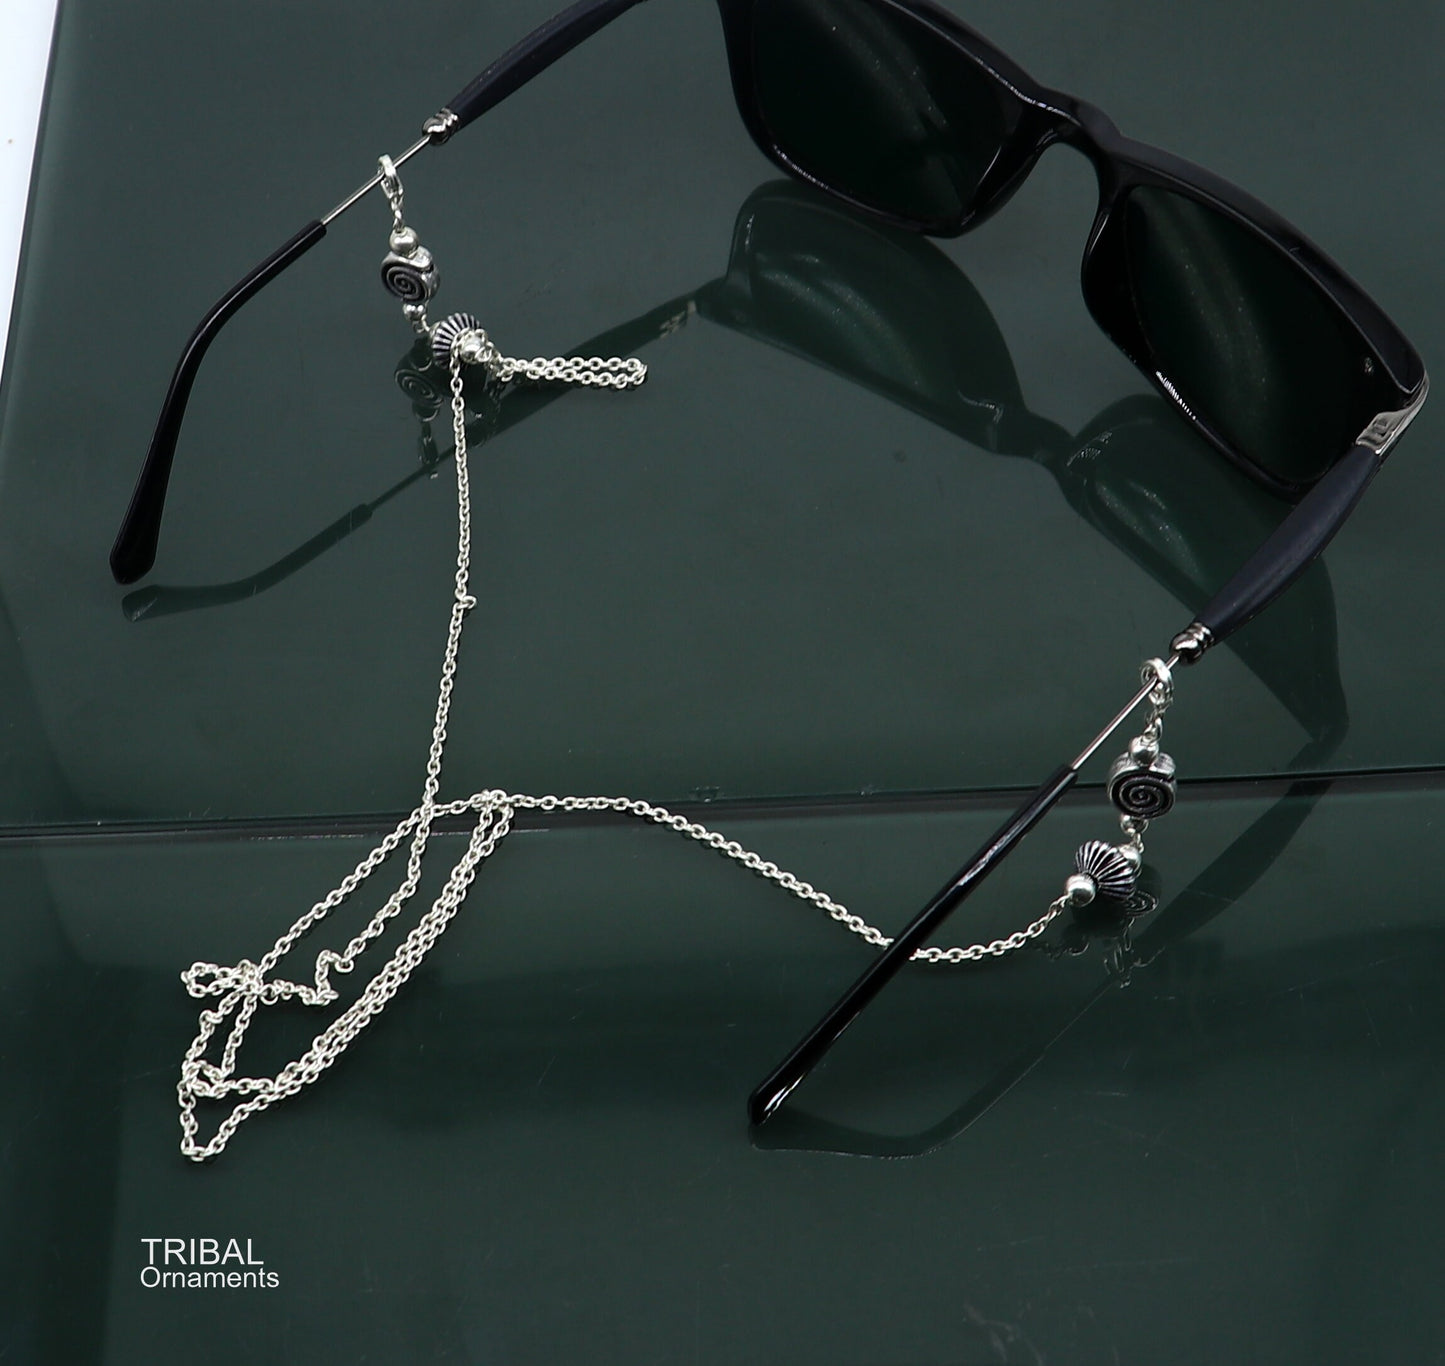 30" long Sterling silver Face Mask Chain ,Eyeglass Glasses Chains, cuban link chain Women Stylish Sunglass Eyeglass Cord mask chain ch139 - TRIBAL ORNAMENTS